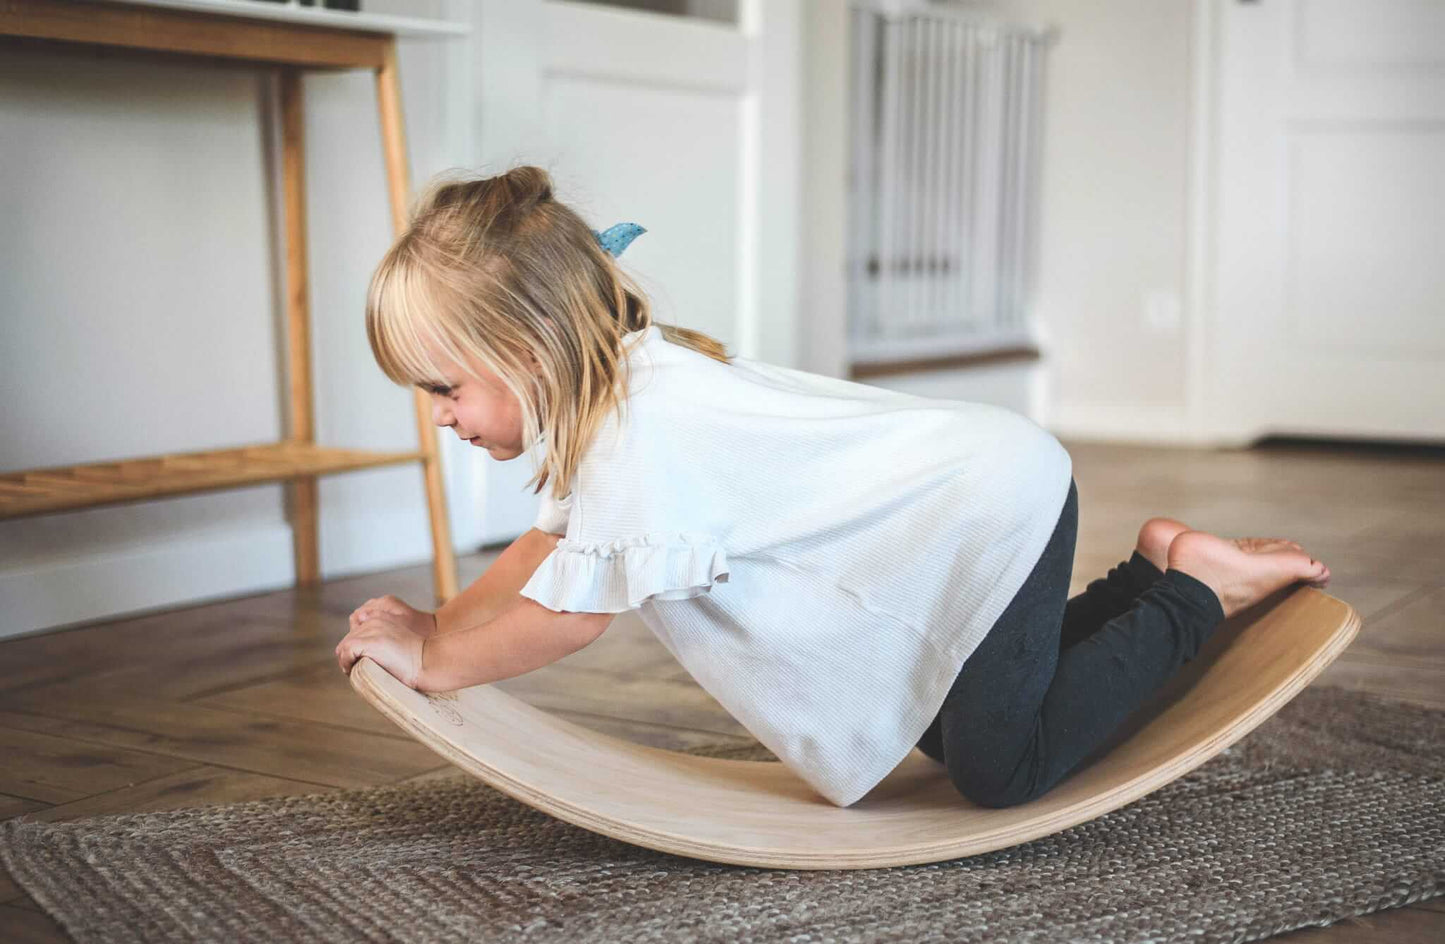 MeowBaby® Balance Board Balancierbrett aus Holz